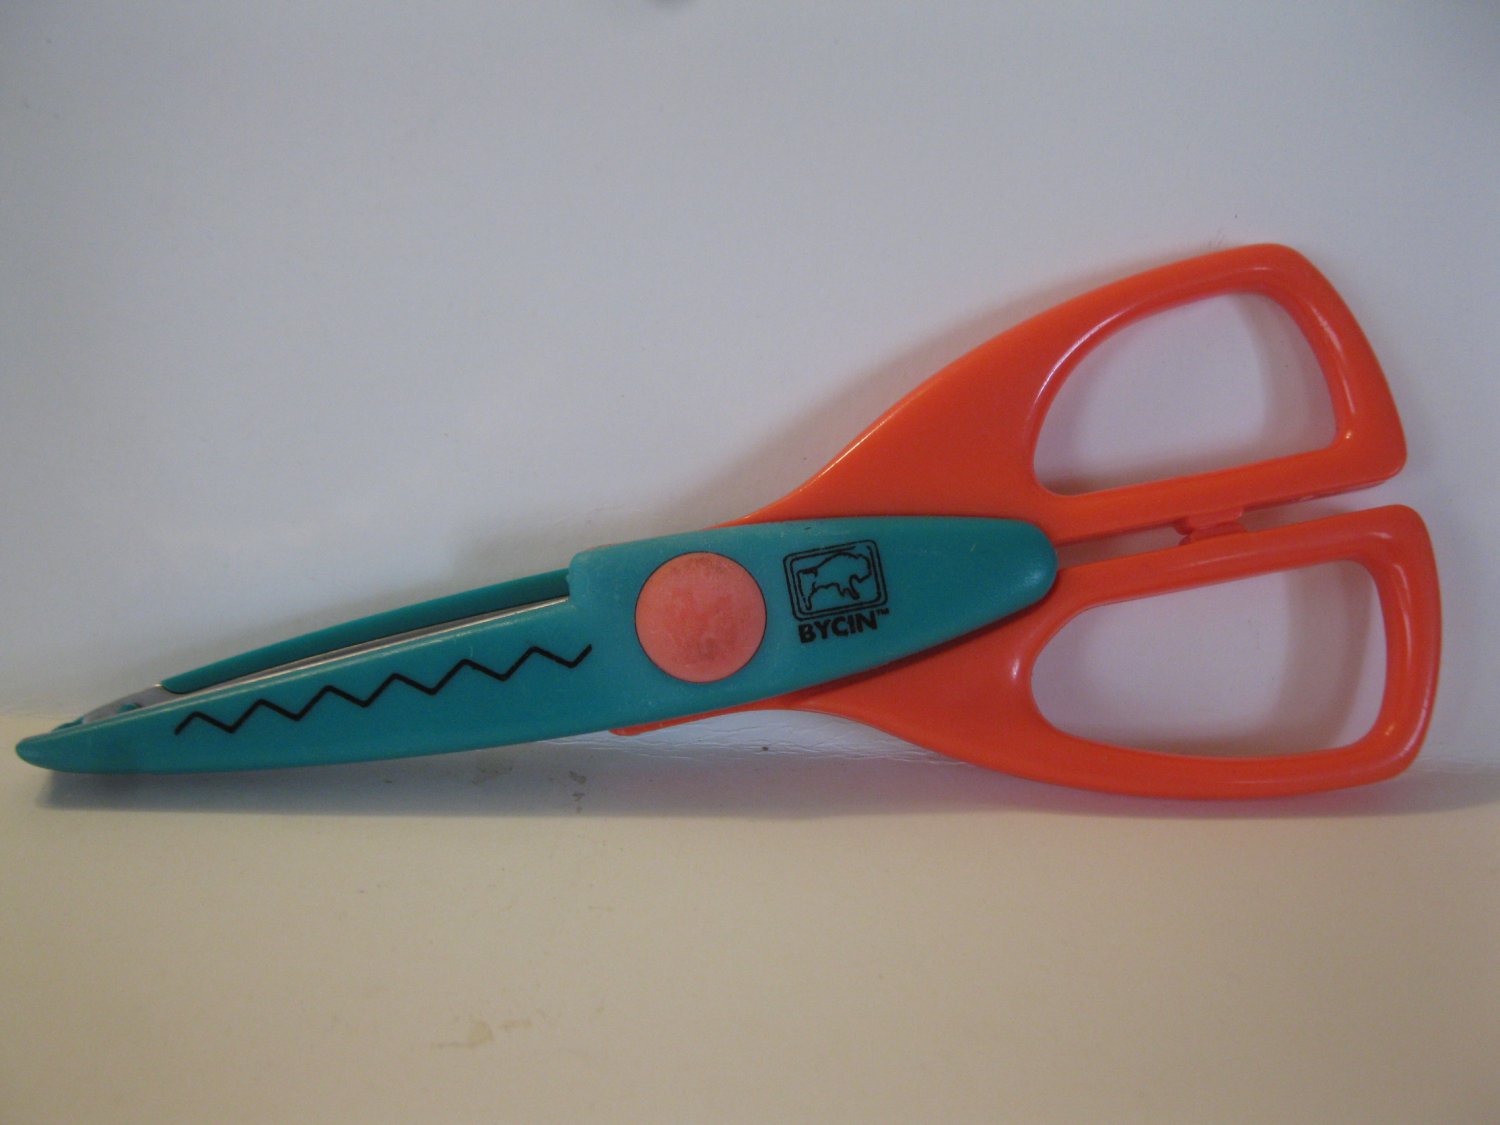 (BX-1) Bycin Crafting Scissors - Teal w/ orange handles